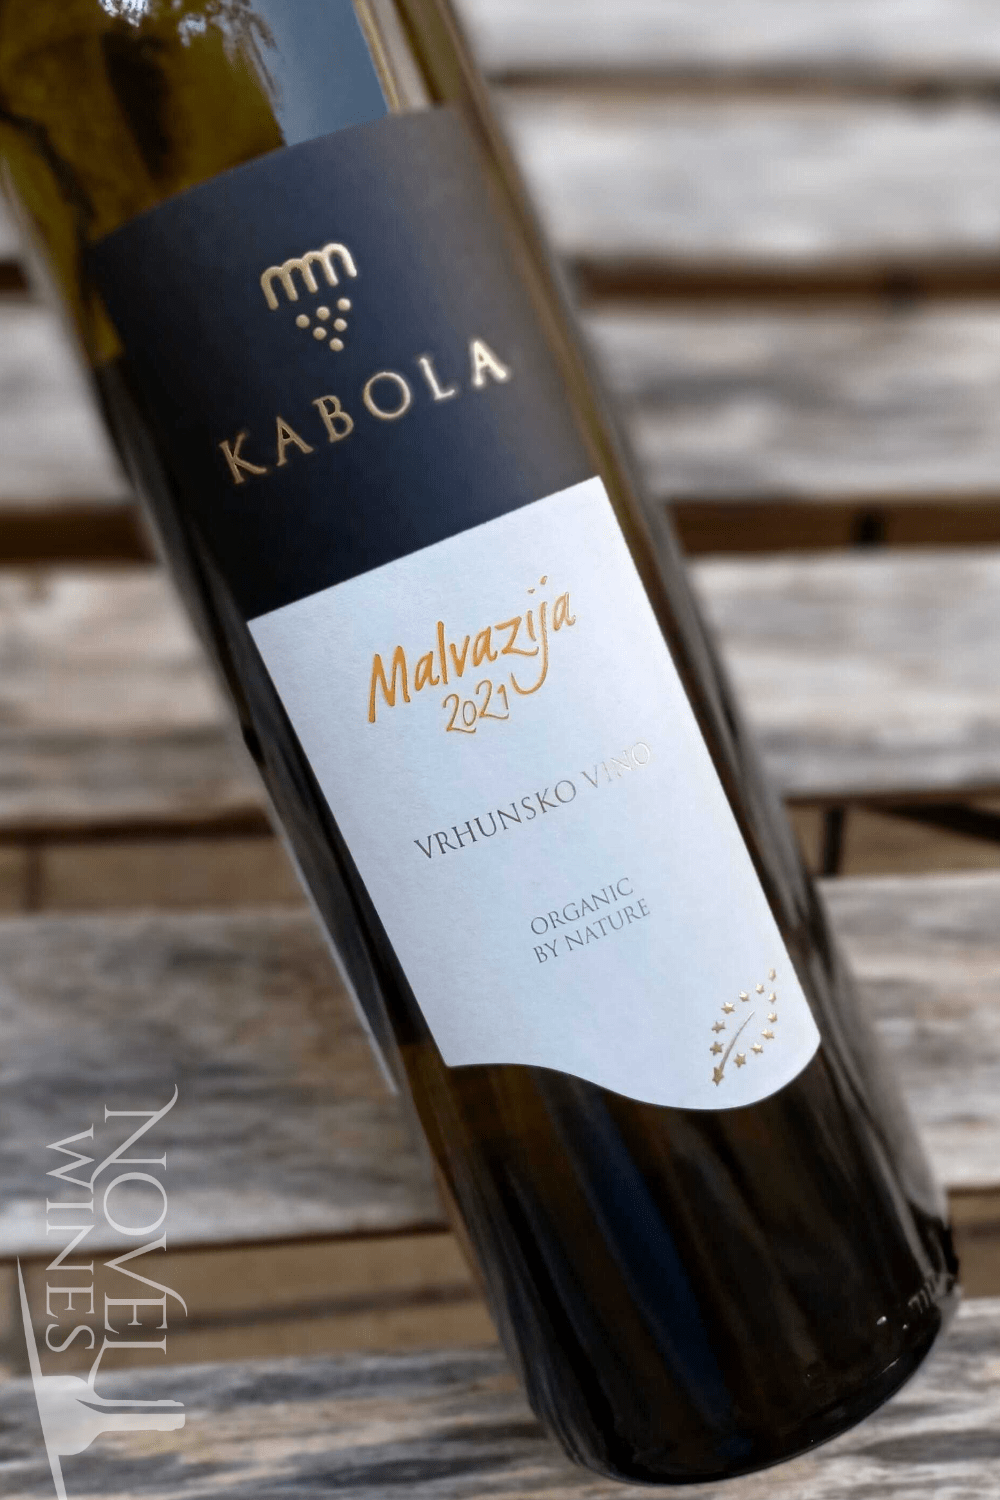 Novel Wines White Wine Kabola Malvazija 2021, Croatia